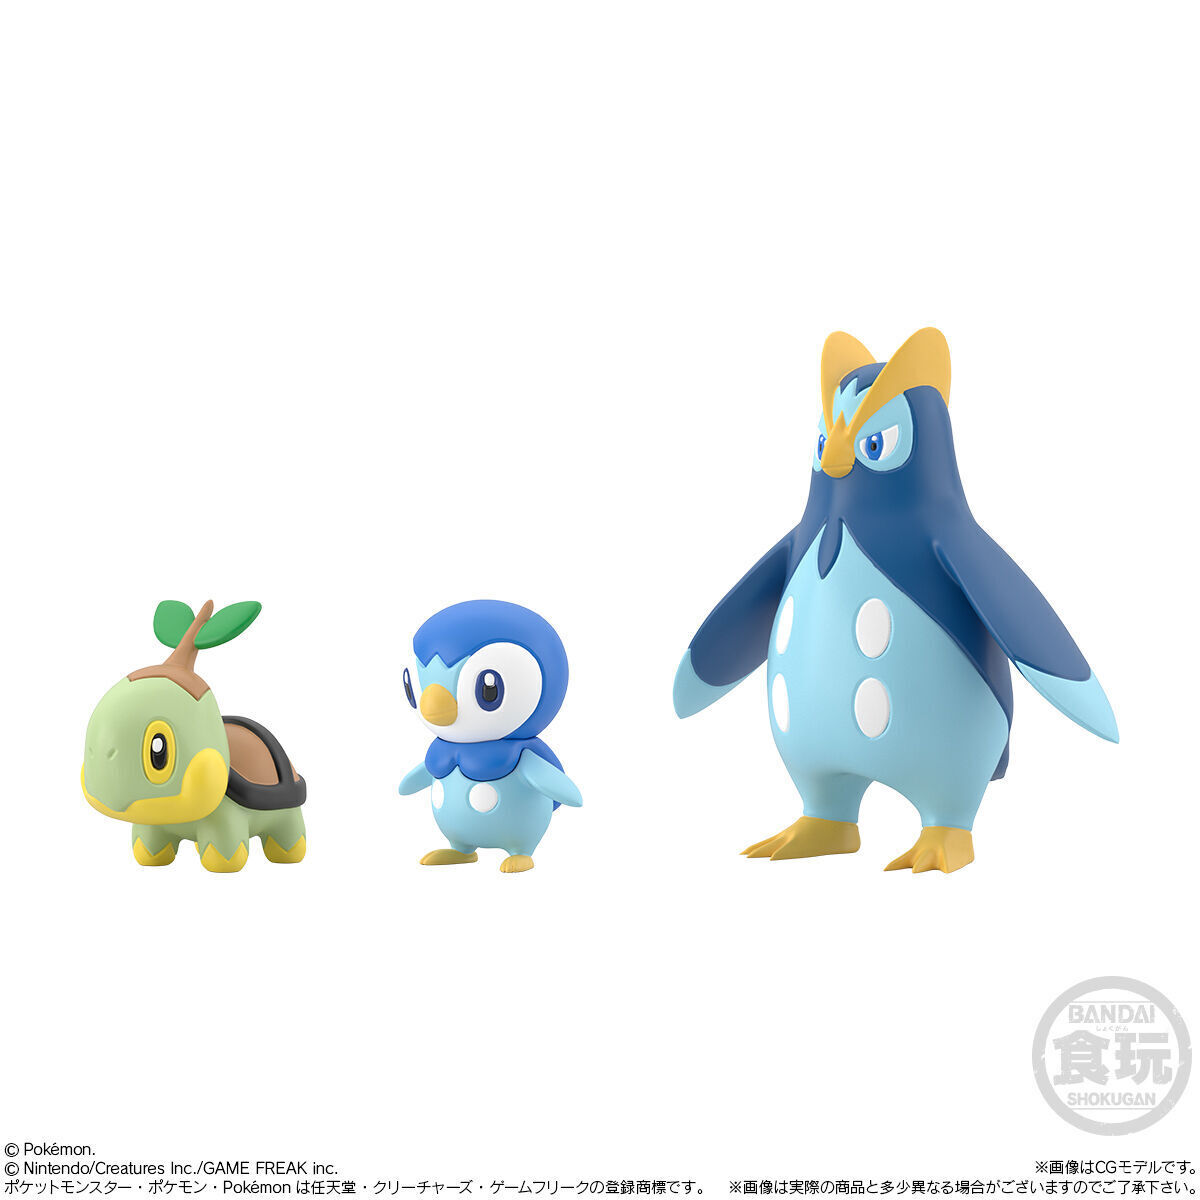 Pokemon 1/20 Scale World Sinnoh Region - Turtwig Piplup Prinplup Figure Bandai